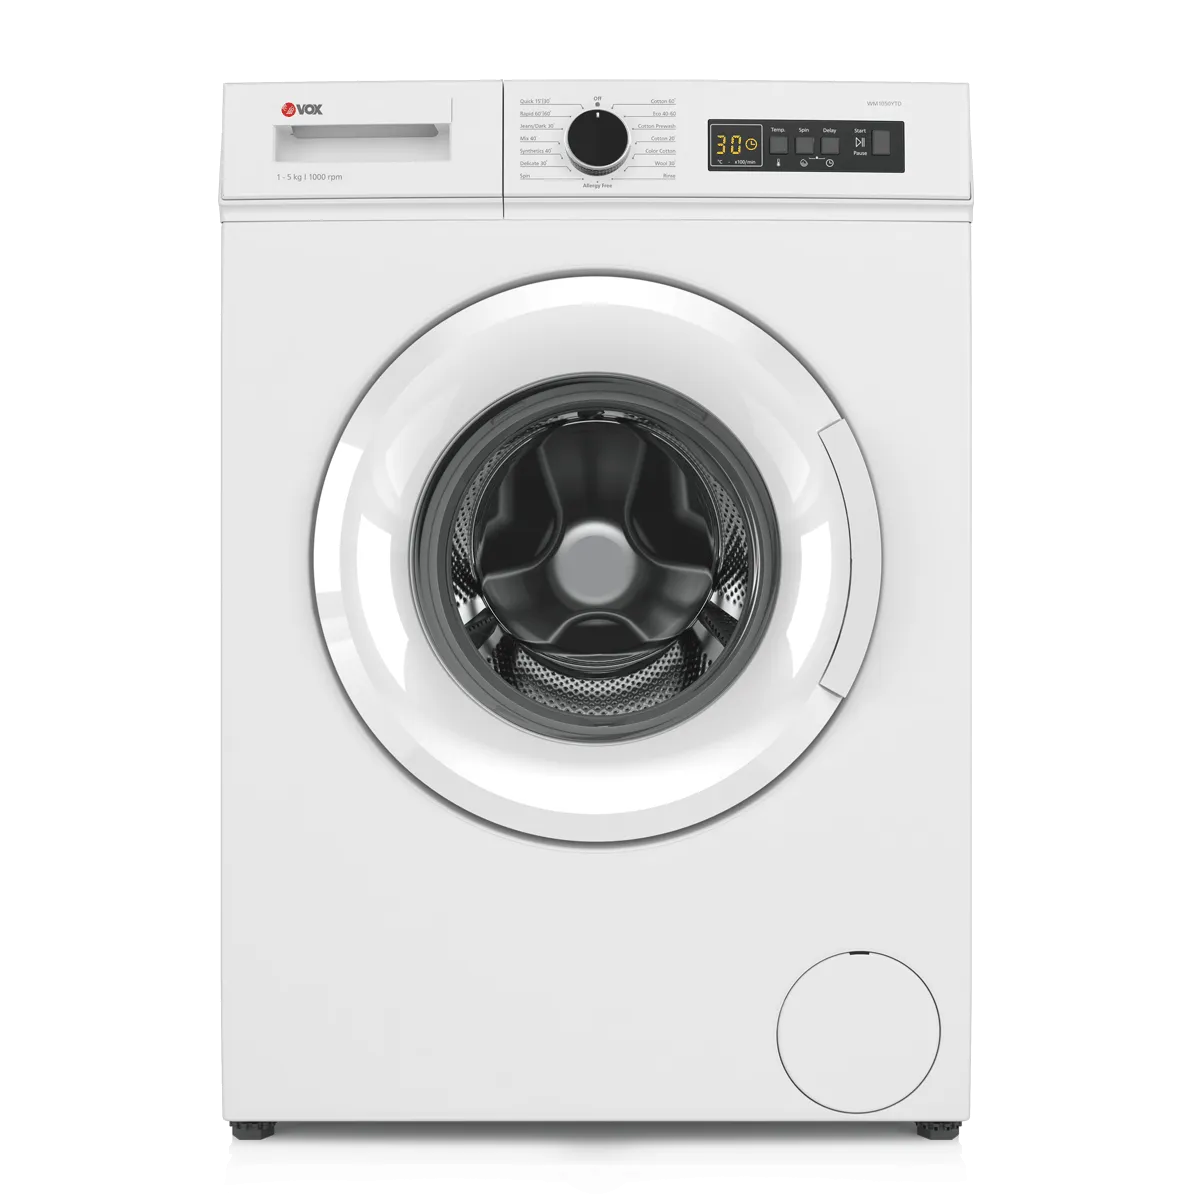 Washing machine WM1050-YTD 